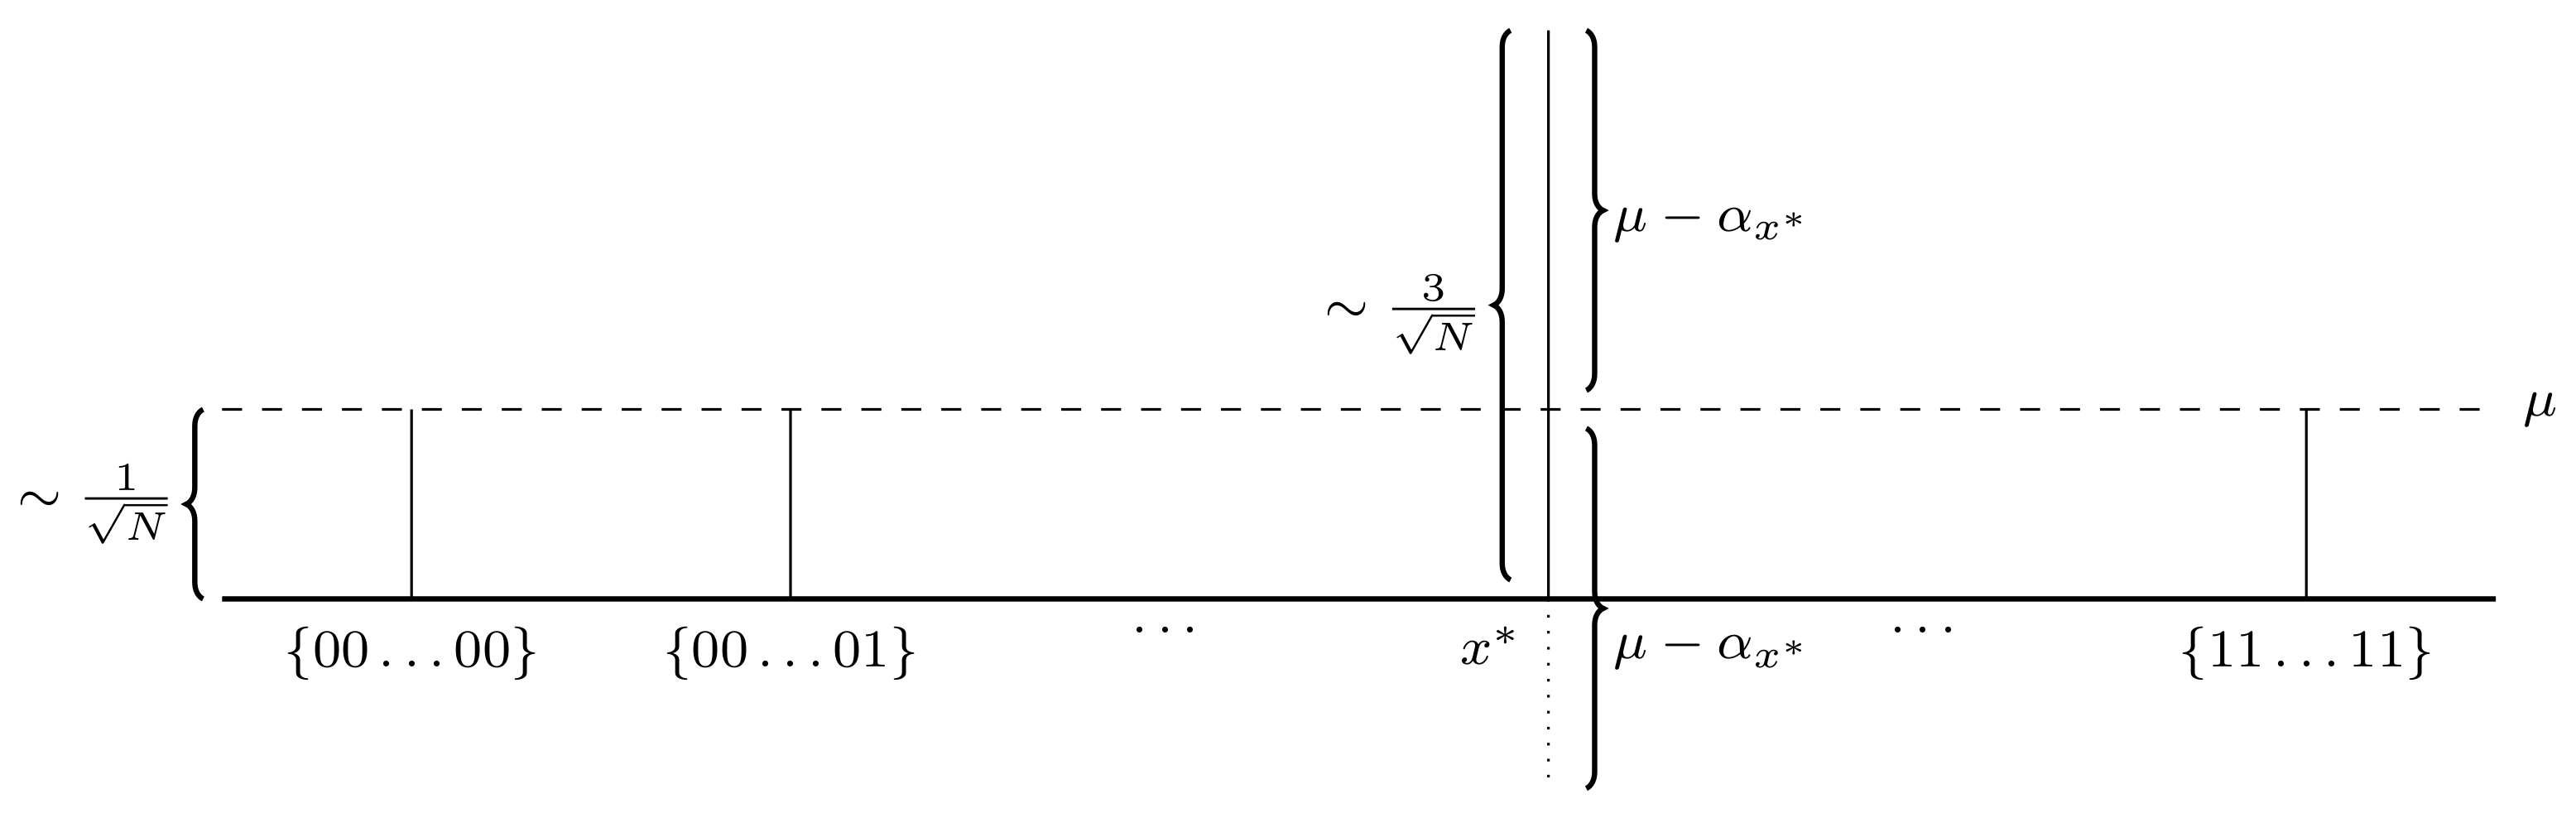 Phase Amplitudes After Inversion About Mean ($\boldsymbol{\alpha}_{t=0}^{\prime}$)